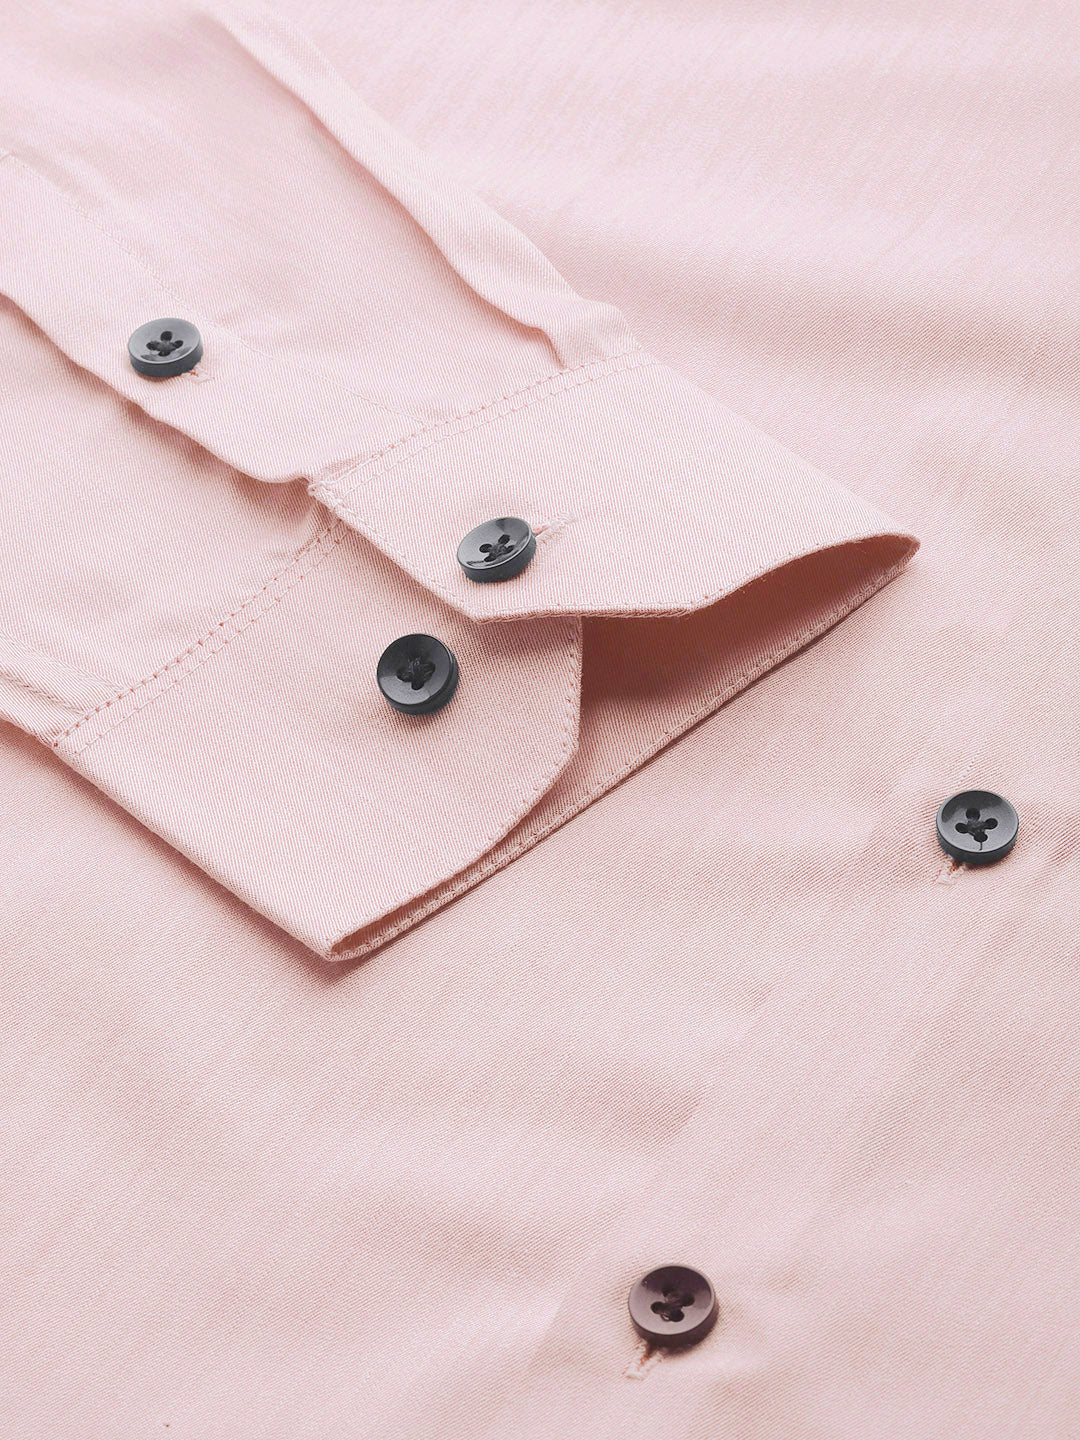 Men's Solid Formal Cotton Shirt ( SF 792Magenta ) - Jainish